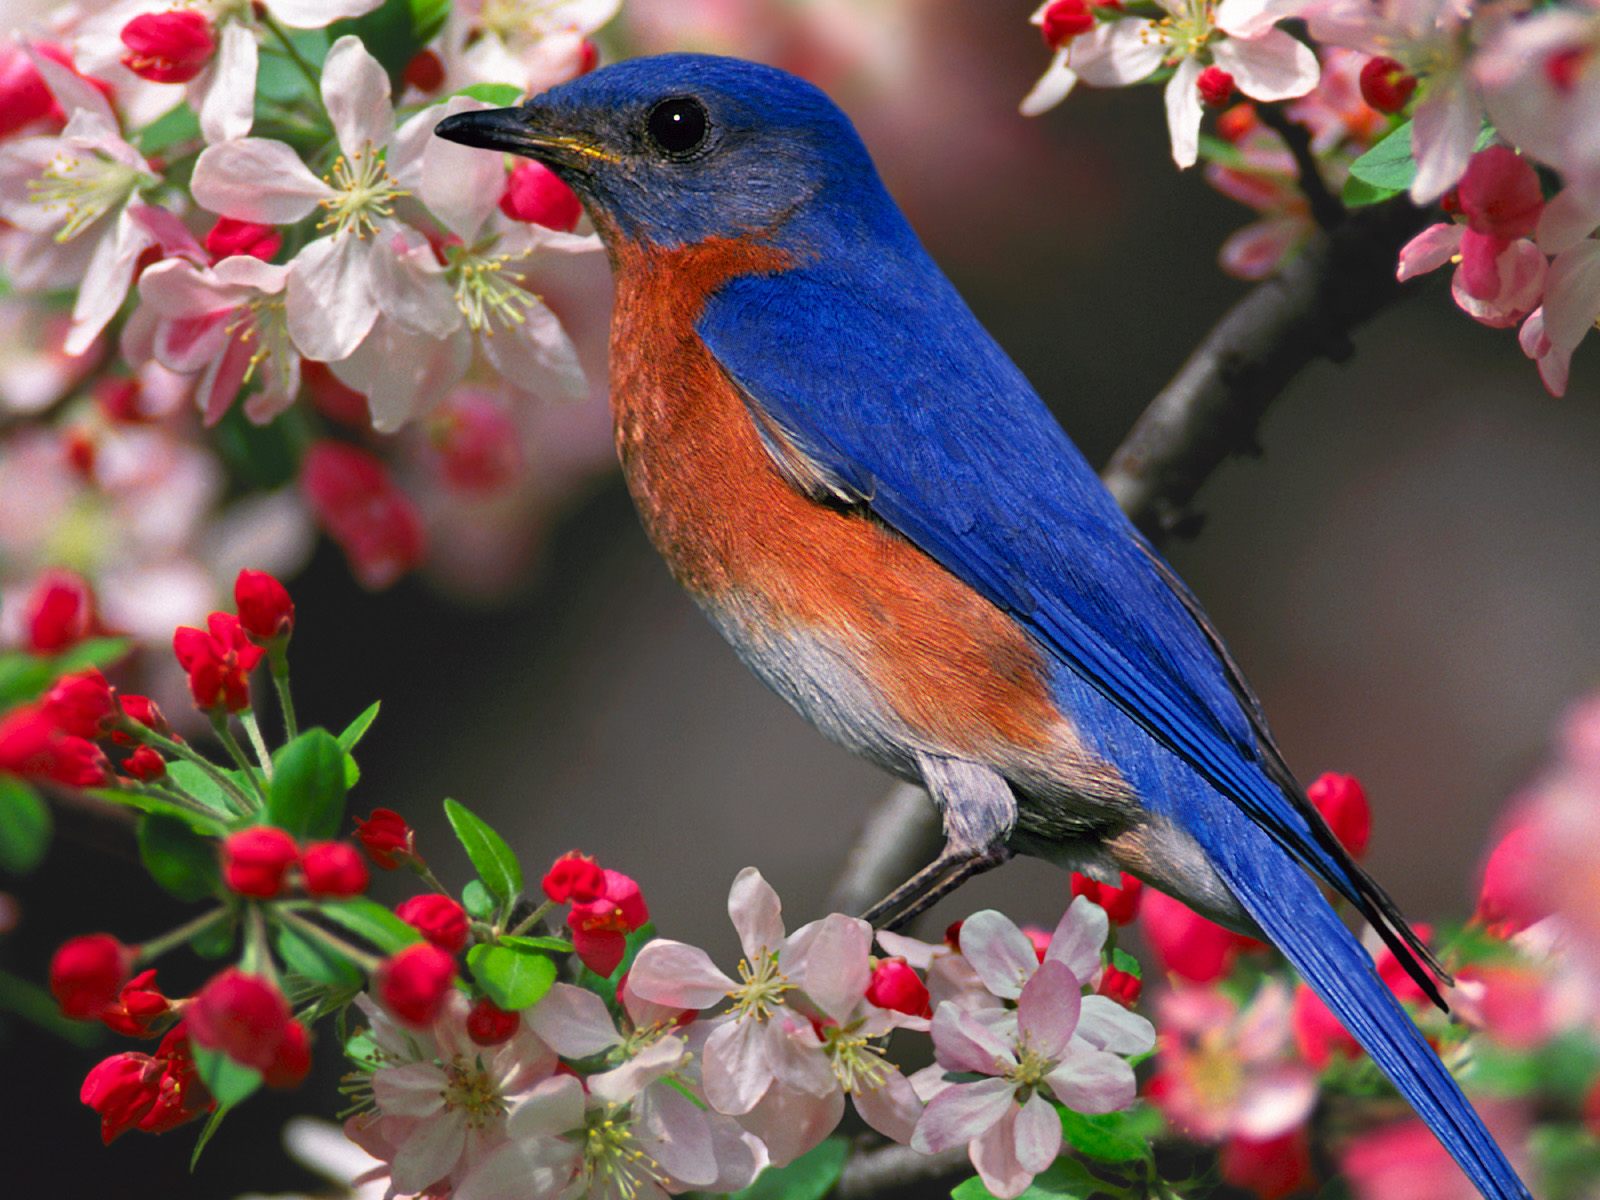 http://4.bp.blogspot.com/_fqhbn8YPG7w/TUcZd8PhV2I/AAAAAAAAAfk/QaCG0UMcqFw/s1600/bright-pink-flowers-tree-with-blue-bird.JPG